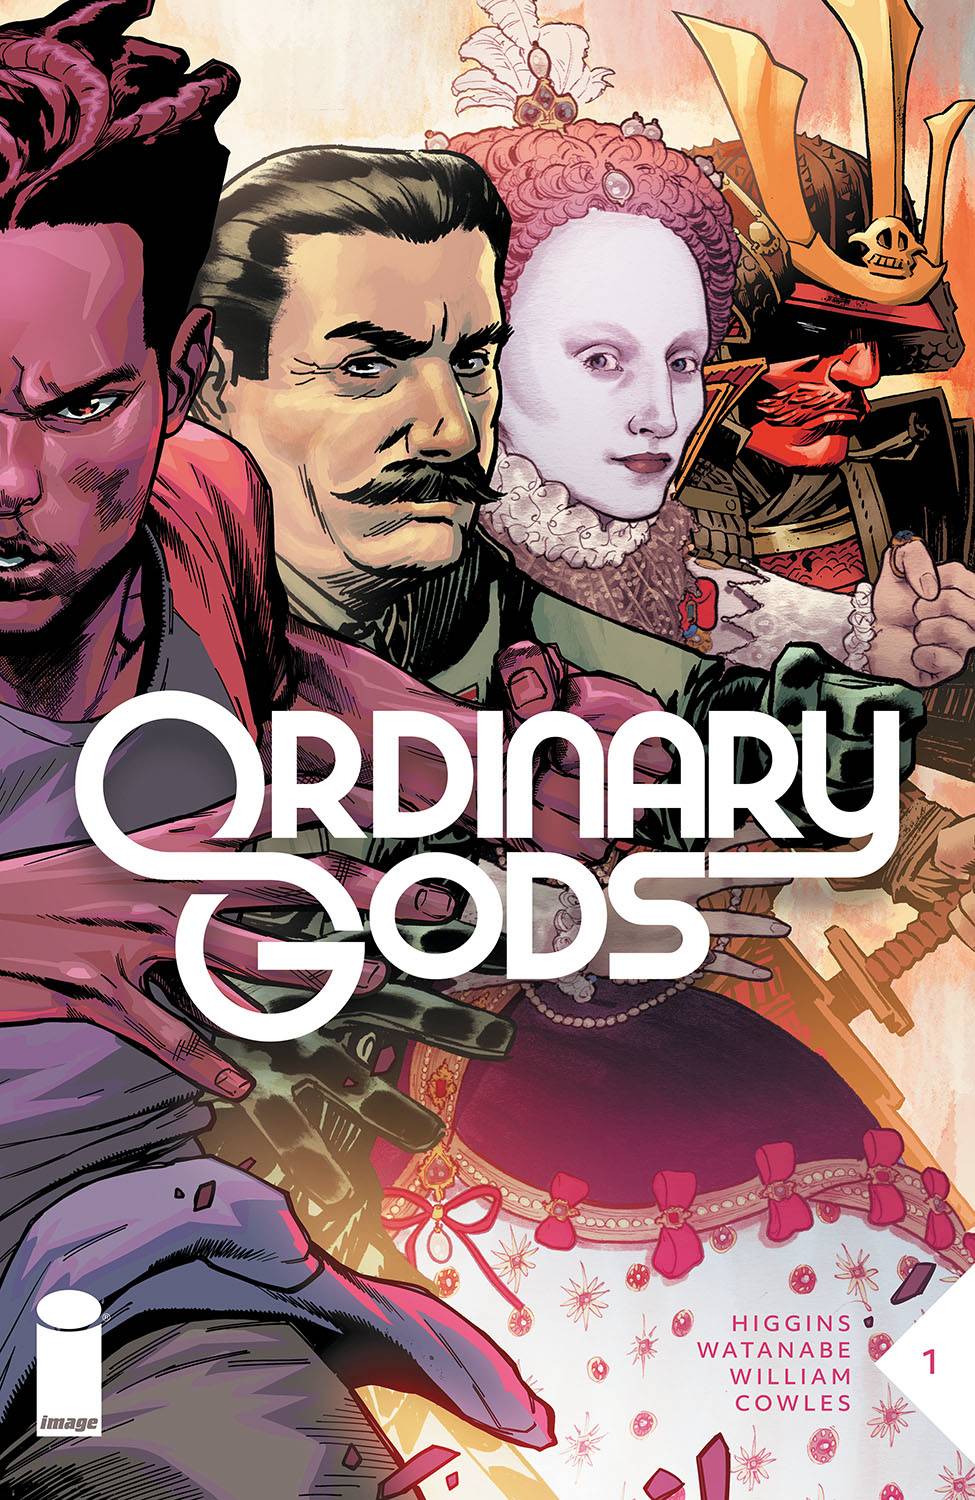 Ordinary Gods #1 (Cover A - Watanabe)